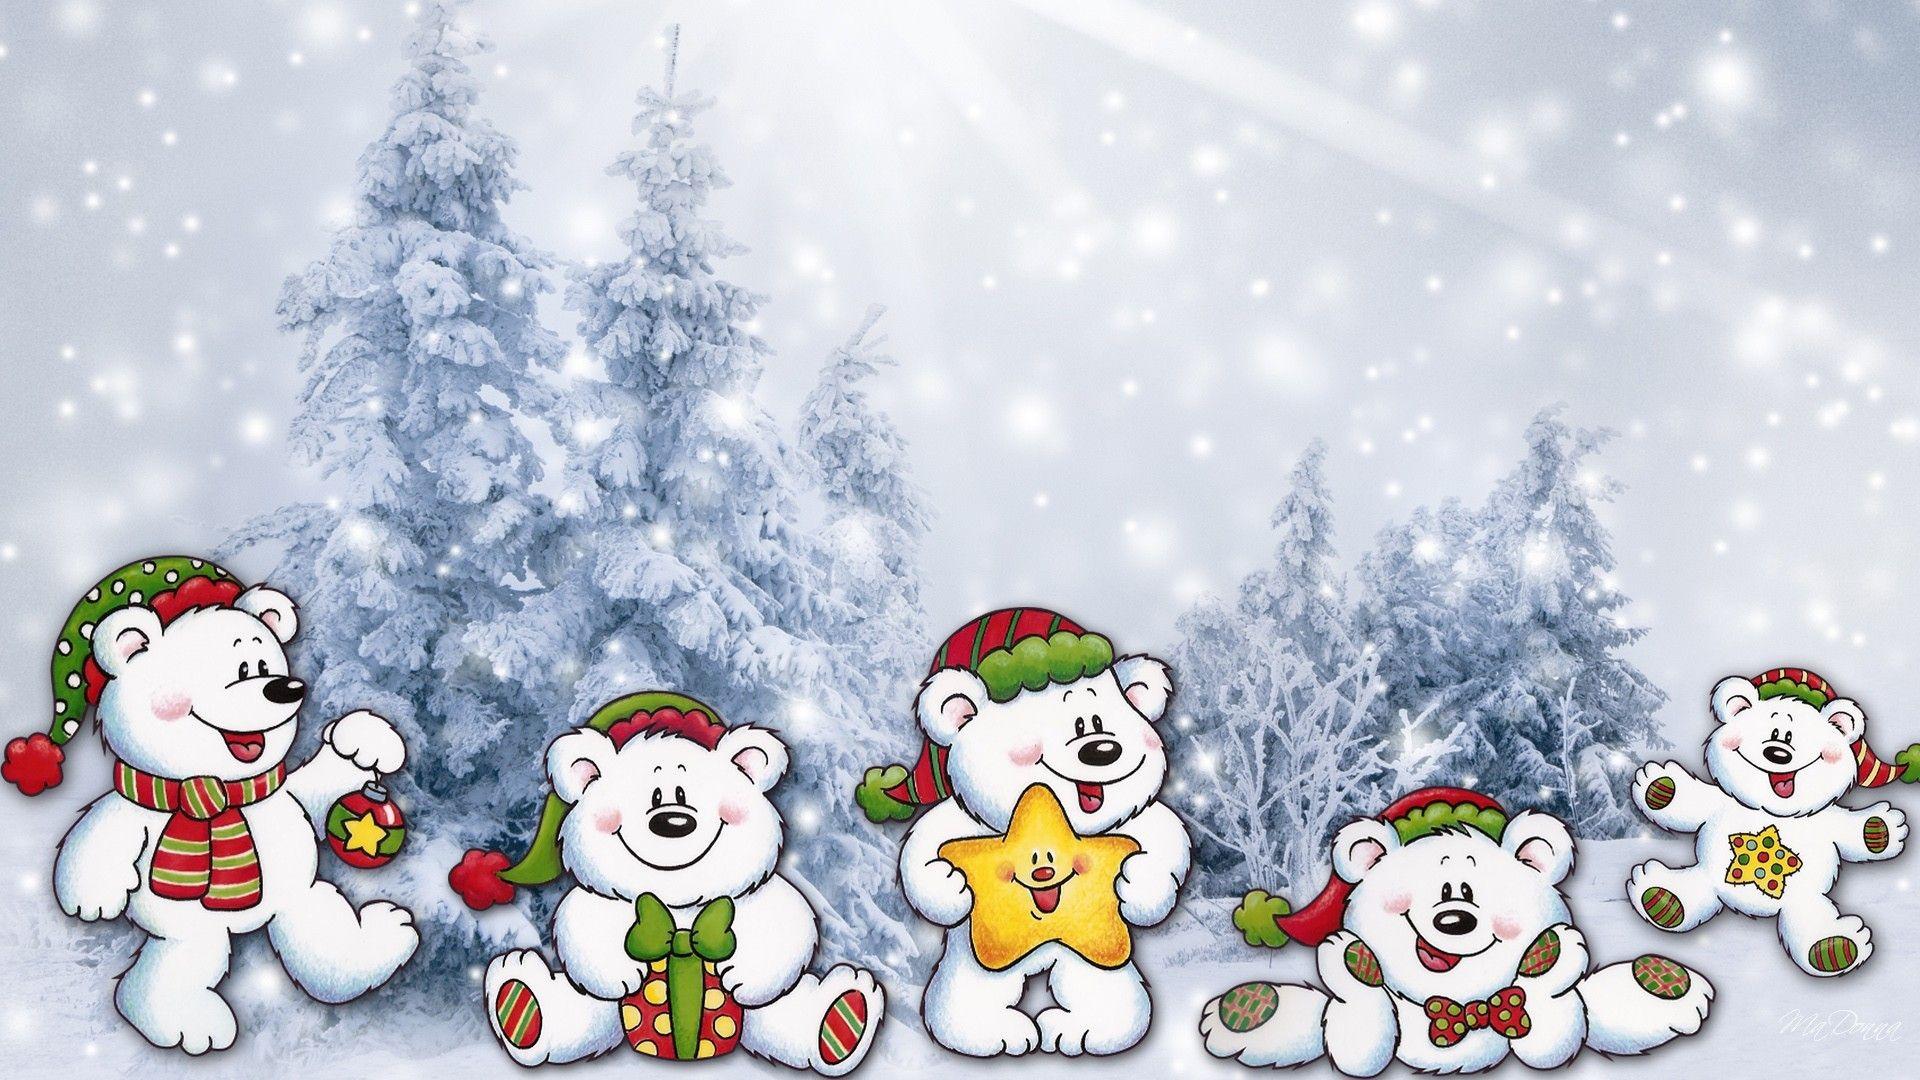 Whimsical Tag wallpaper: Natures Decorations Feliz Navidad